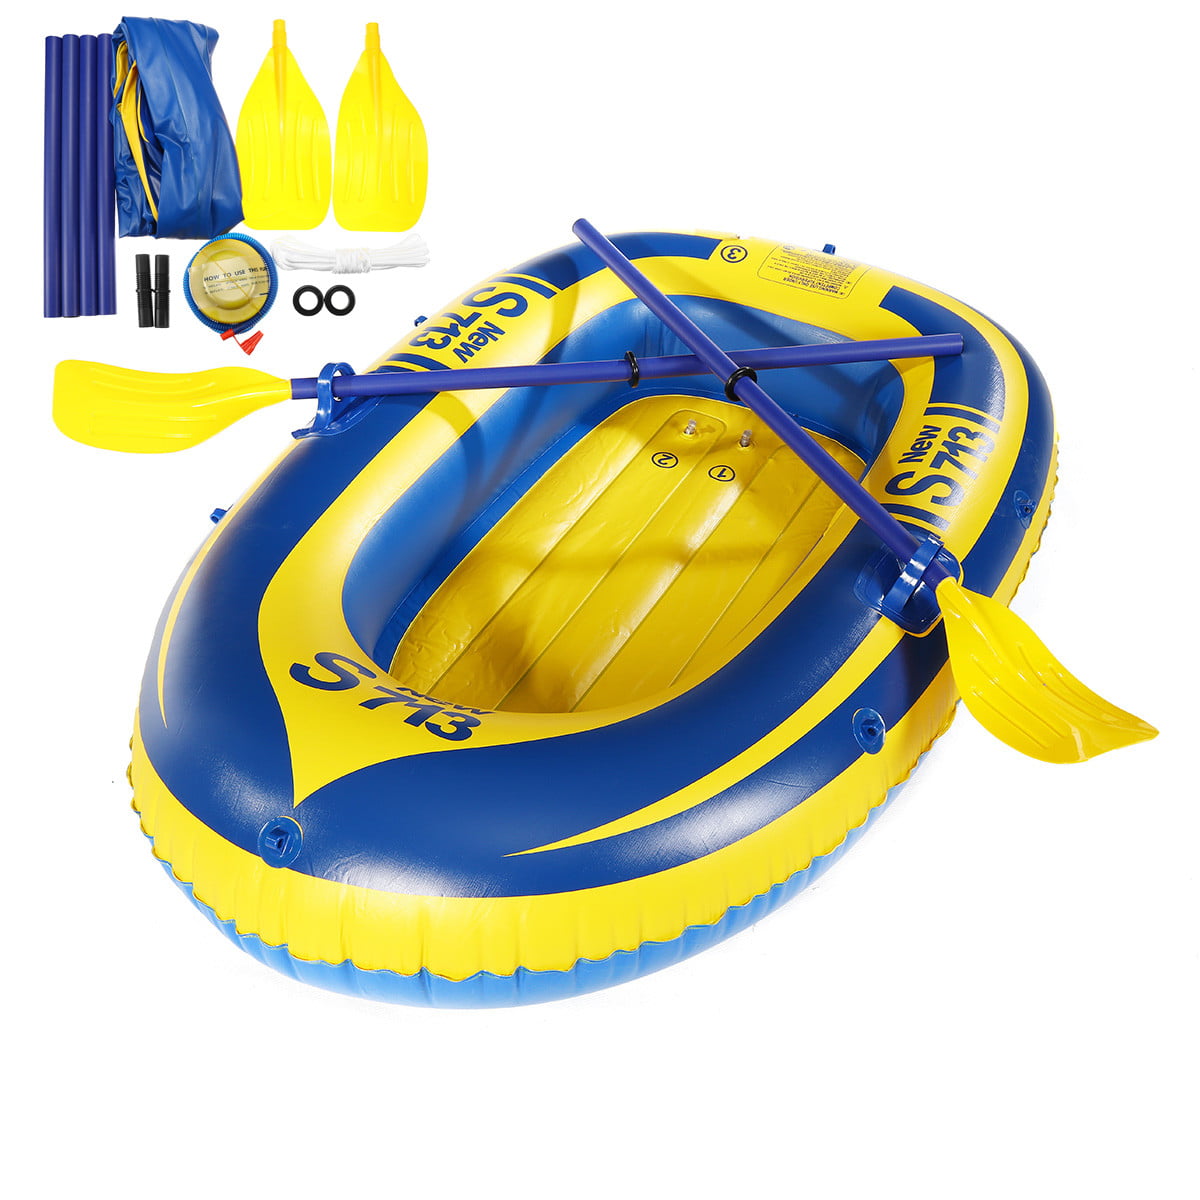 1/2 Person Inflatable Rafting/Fishing Boat Set Kayak Pool Raft with Air Pump 